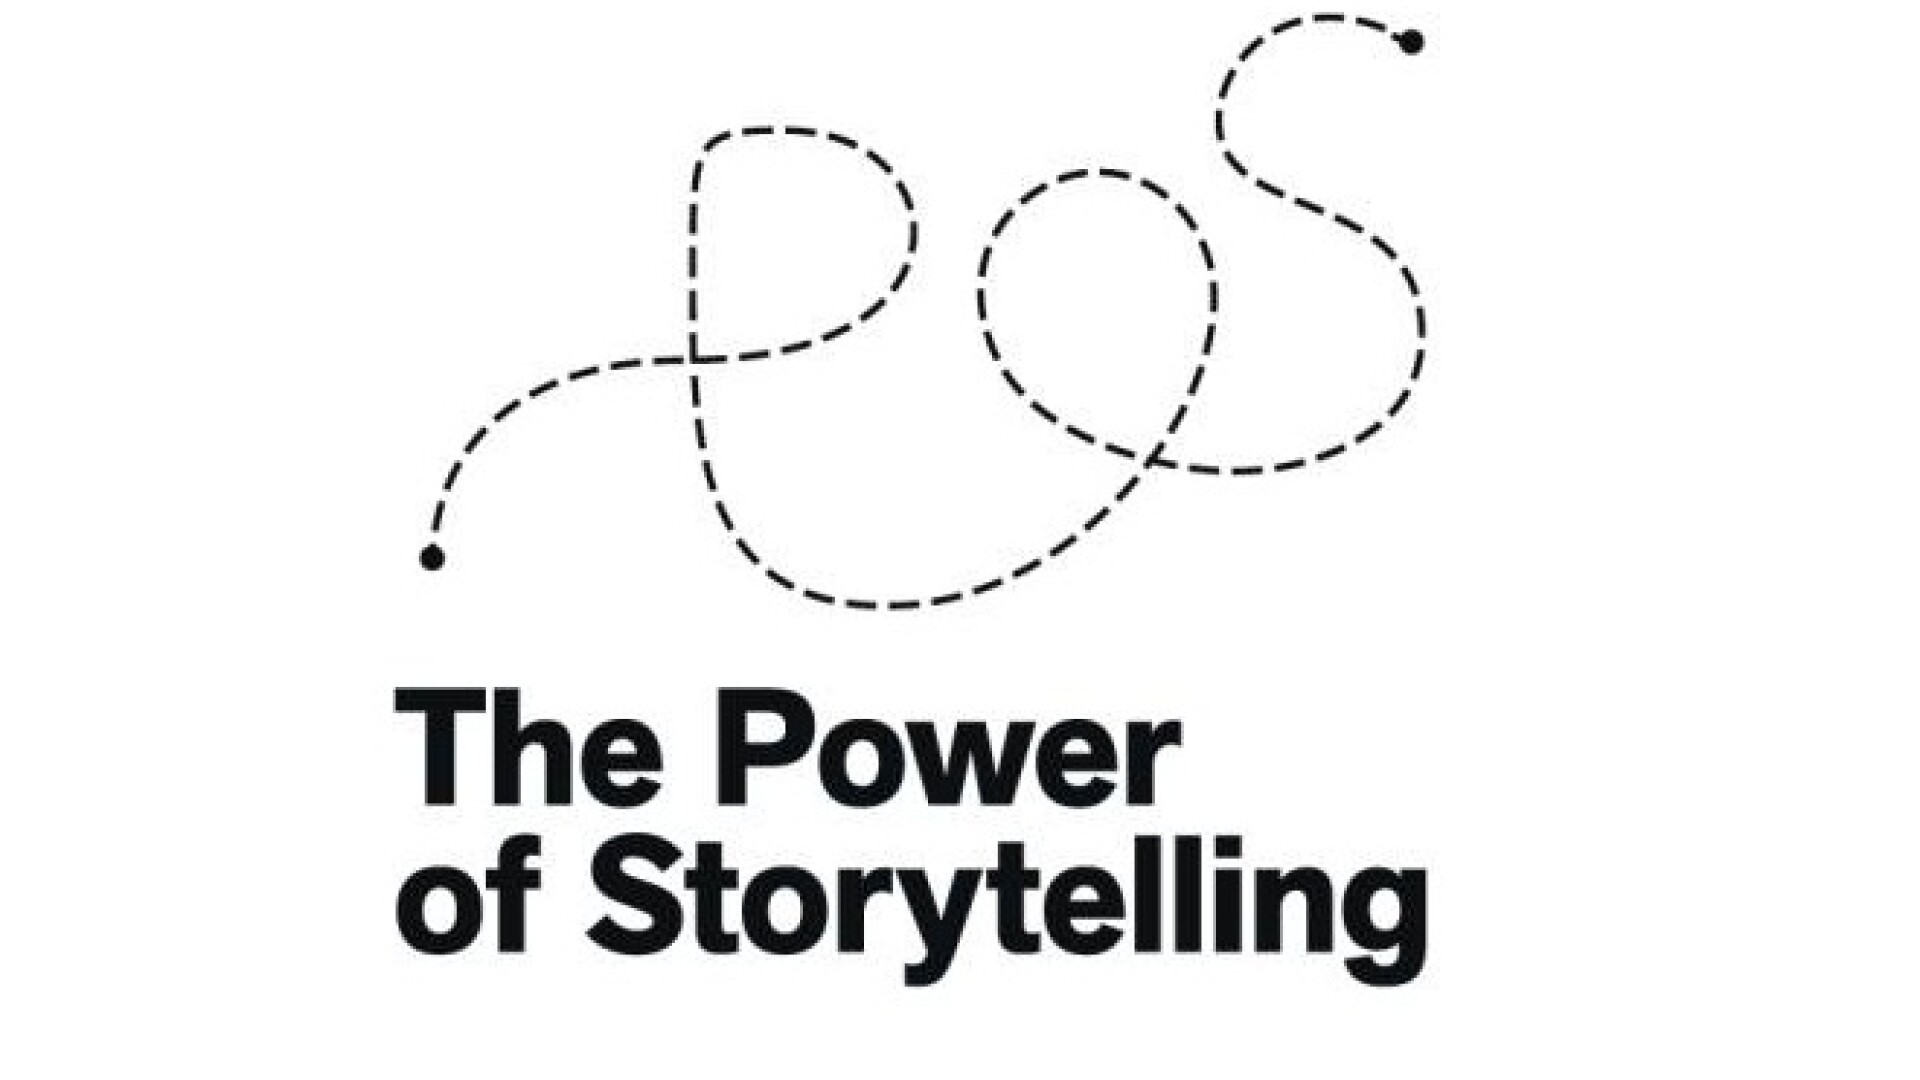 Povestile pot schimba lumea. Conferinta The Power of Storytelling din nou la Cluj